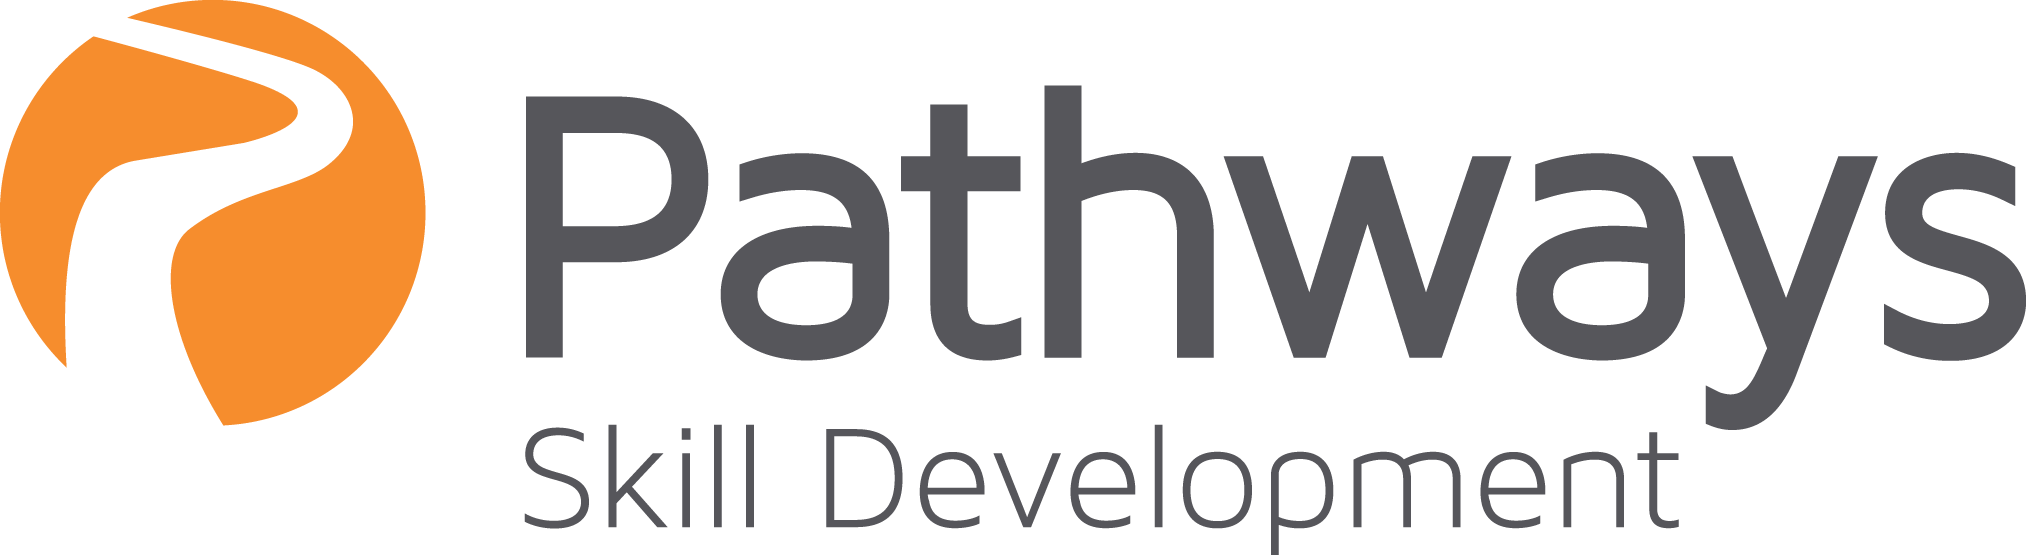 Pathways Skills Development Logo